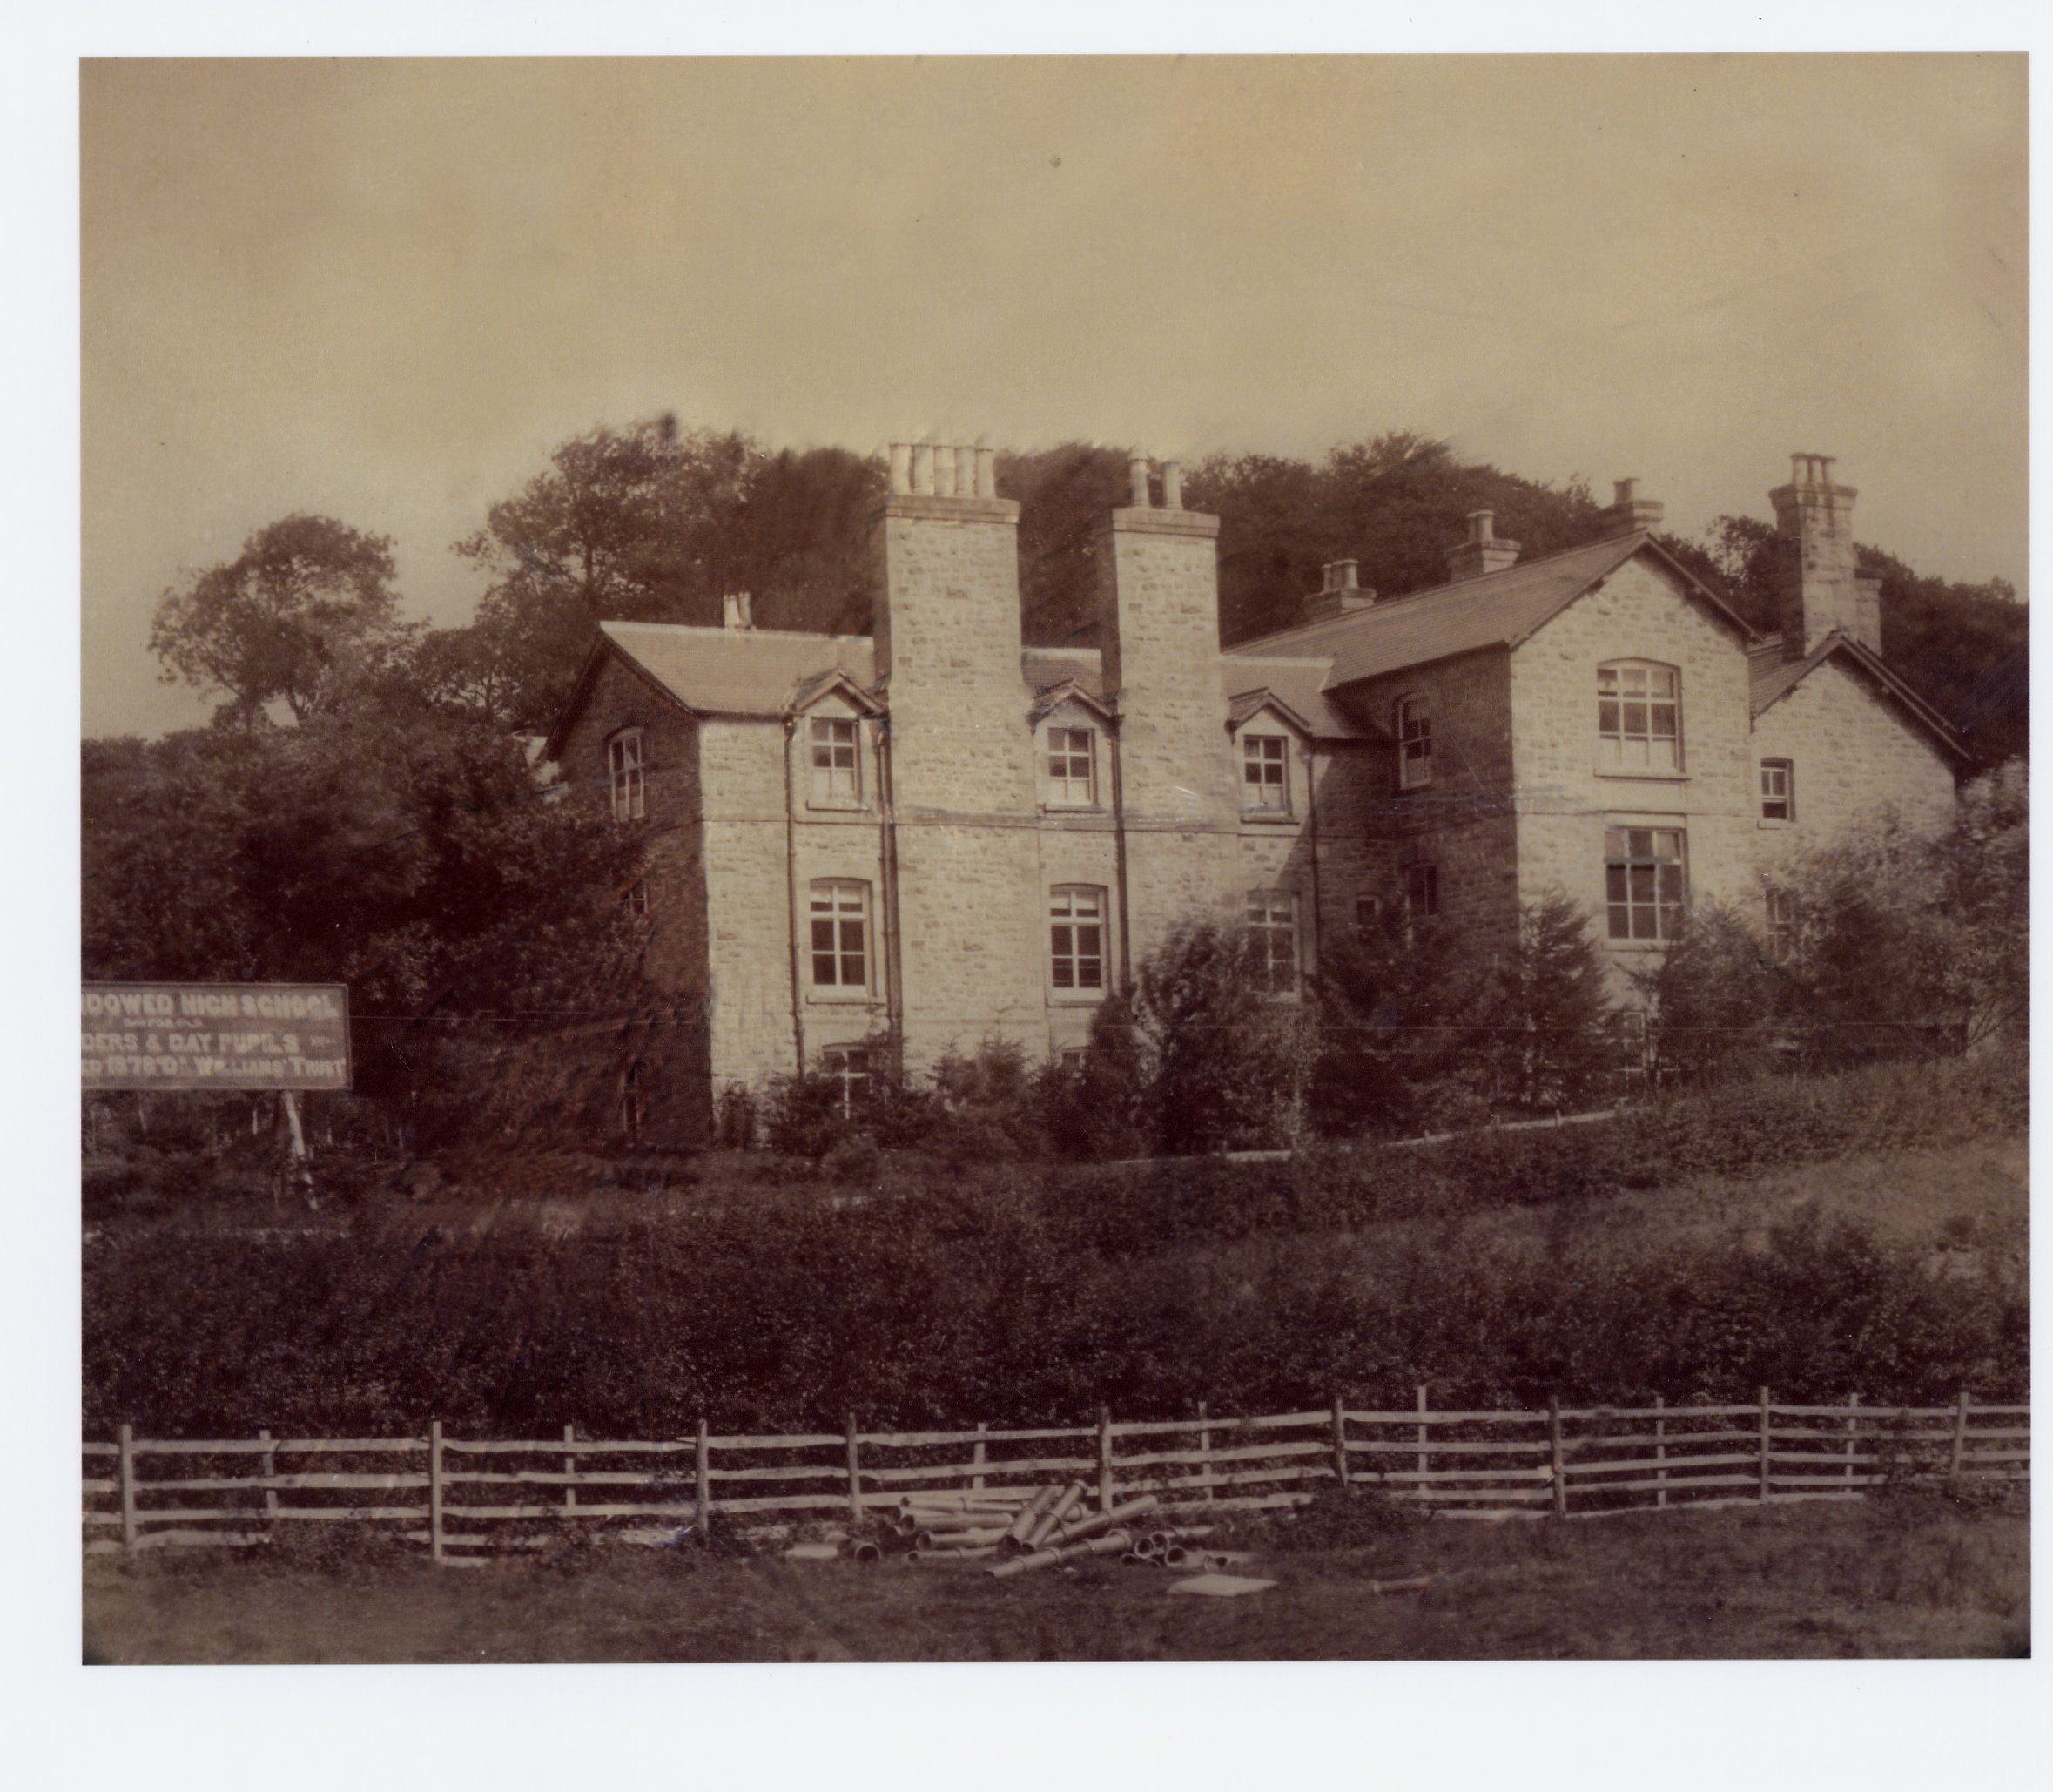 Dr Williams' School building, 1880s